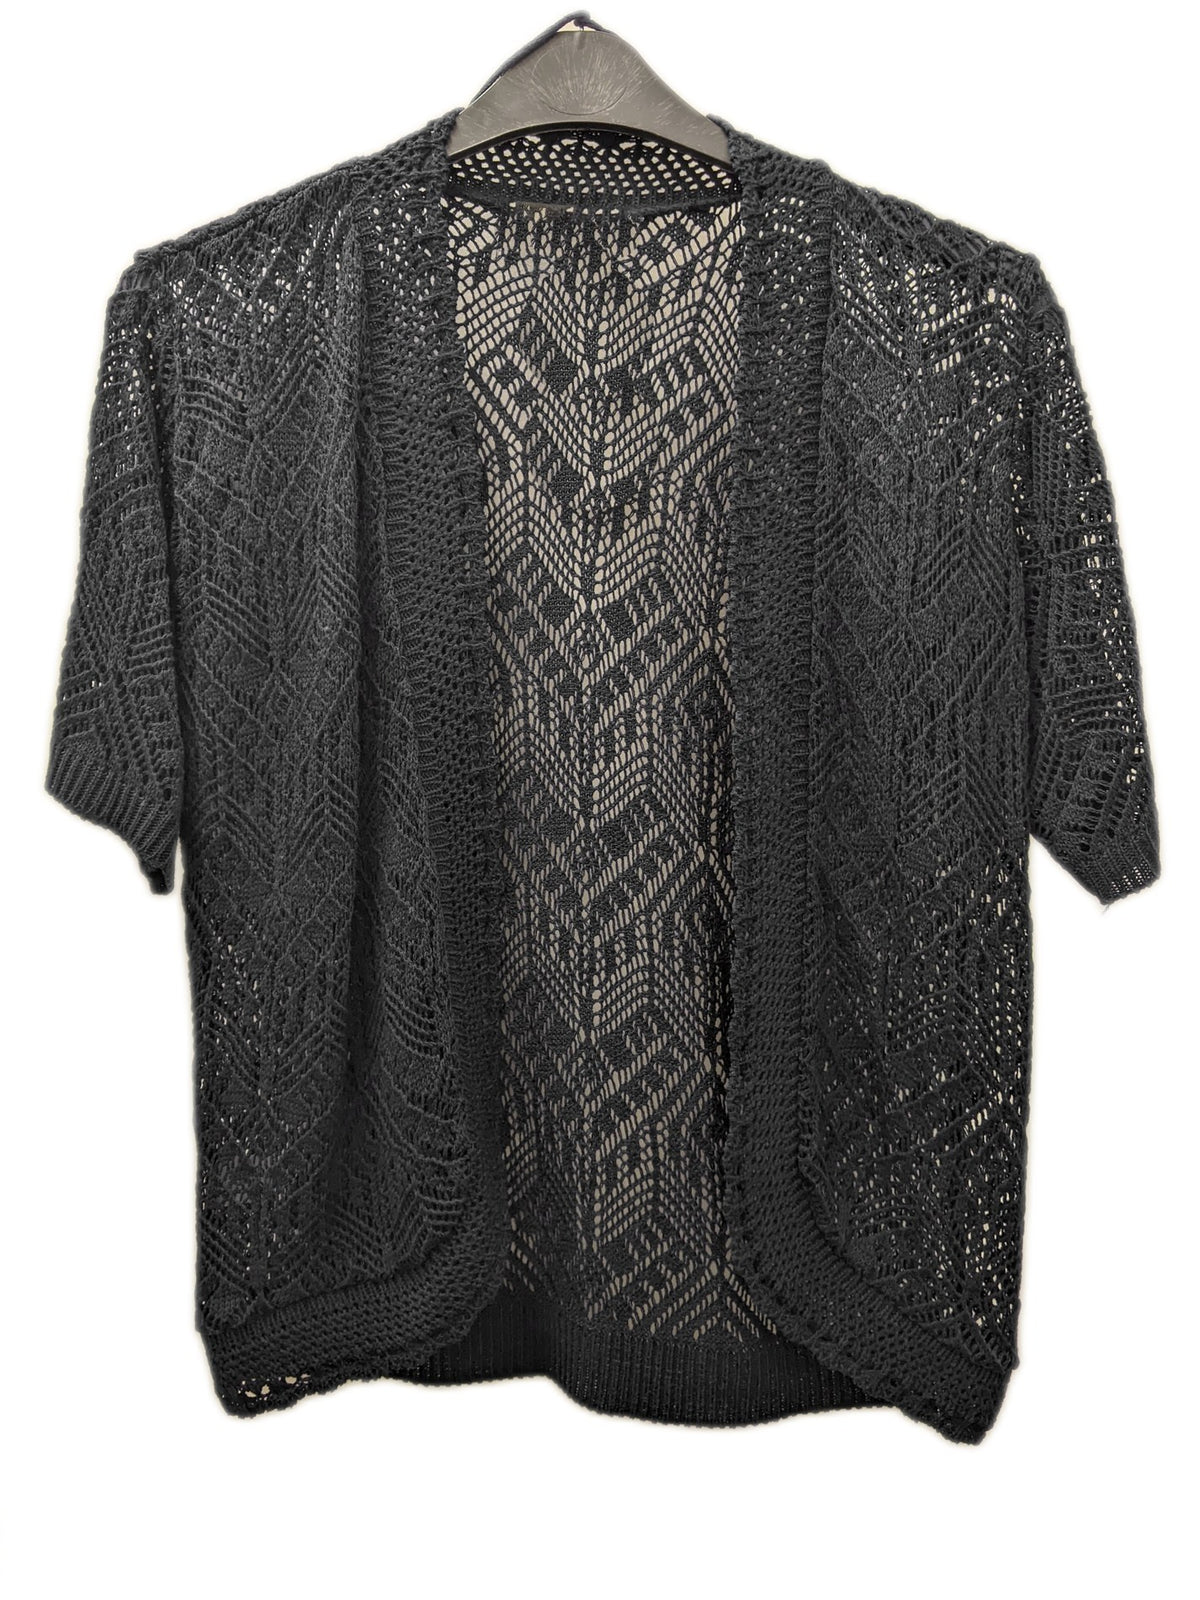 Black Knitted Crochet Open Short Sleeve Cardigan